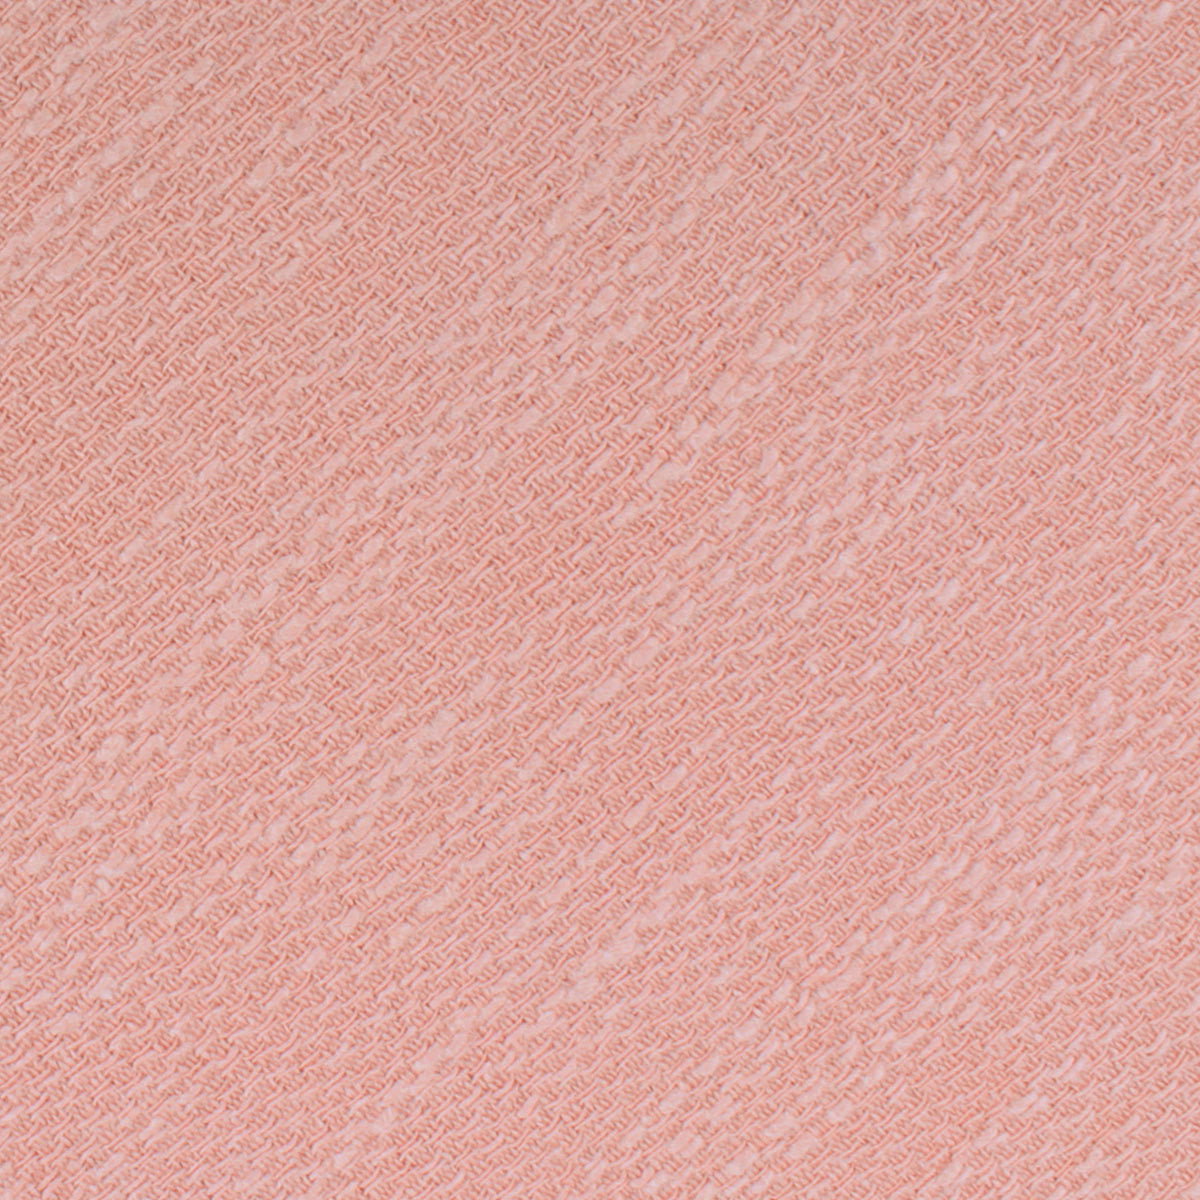 Blush Flamingo Pink Linen Fabric Swatch